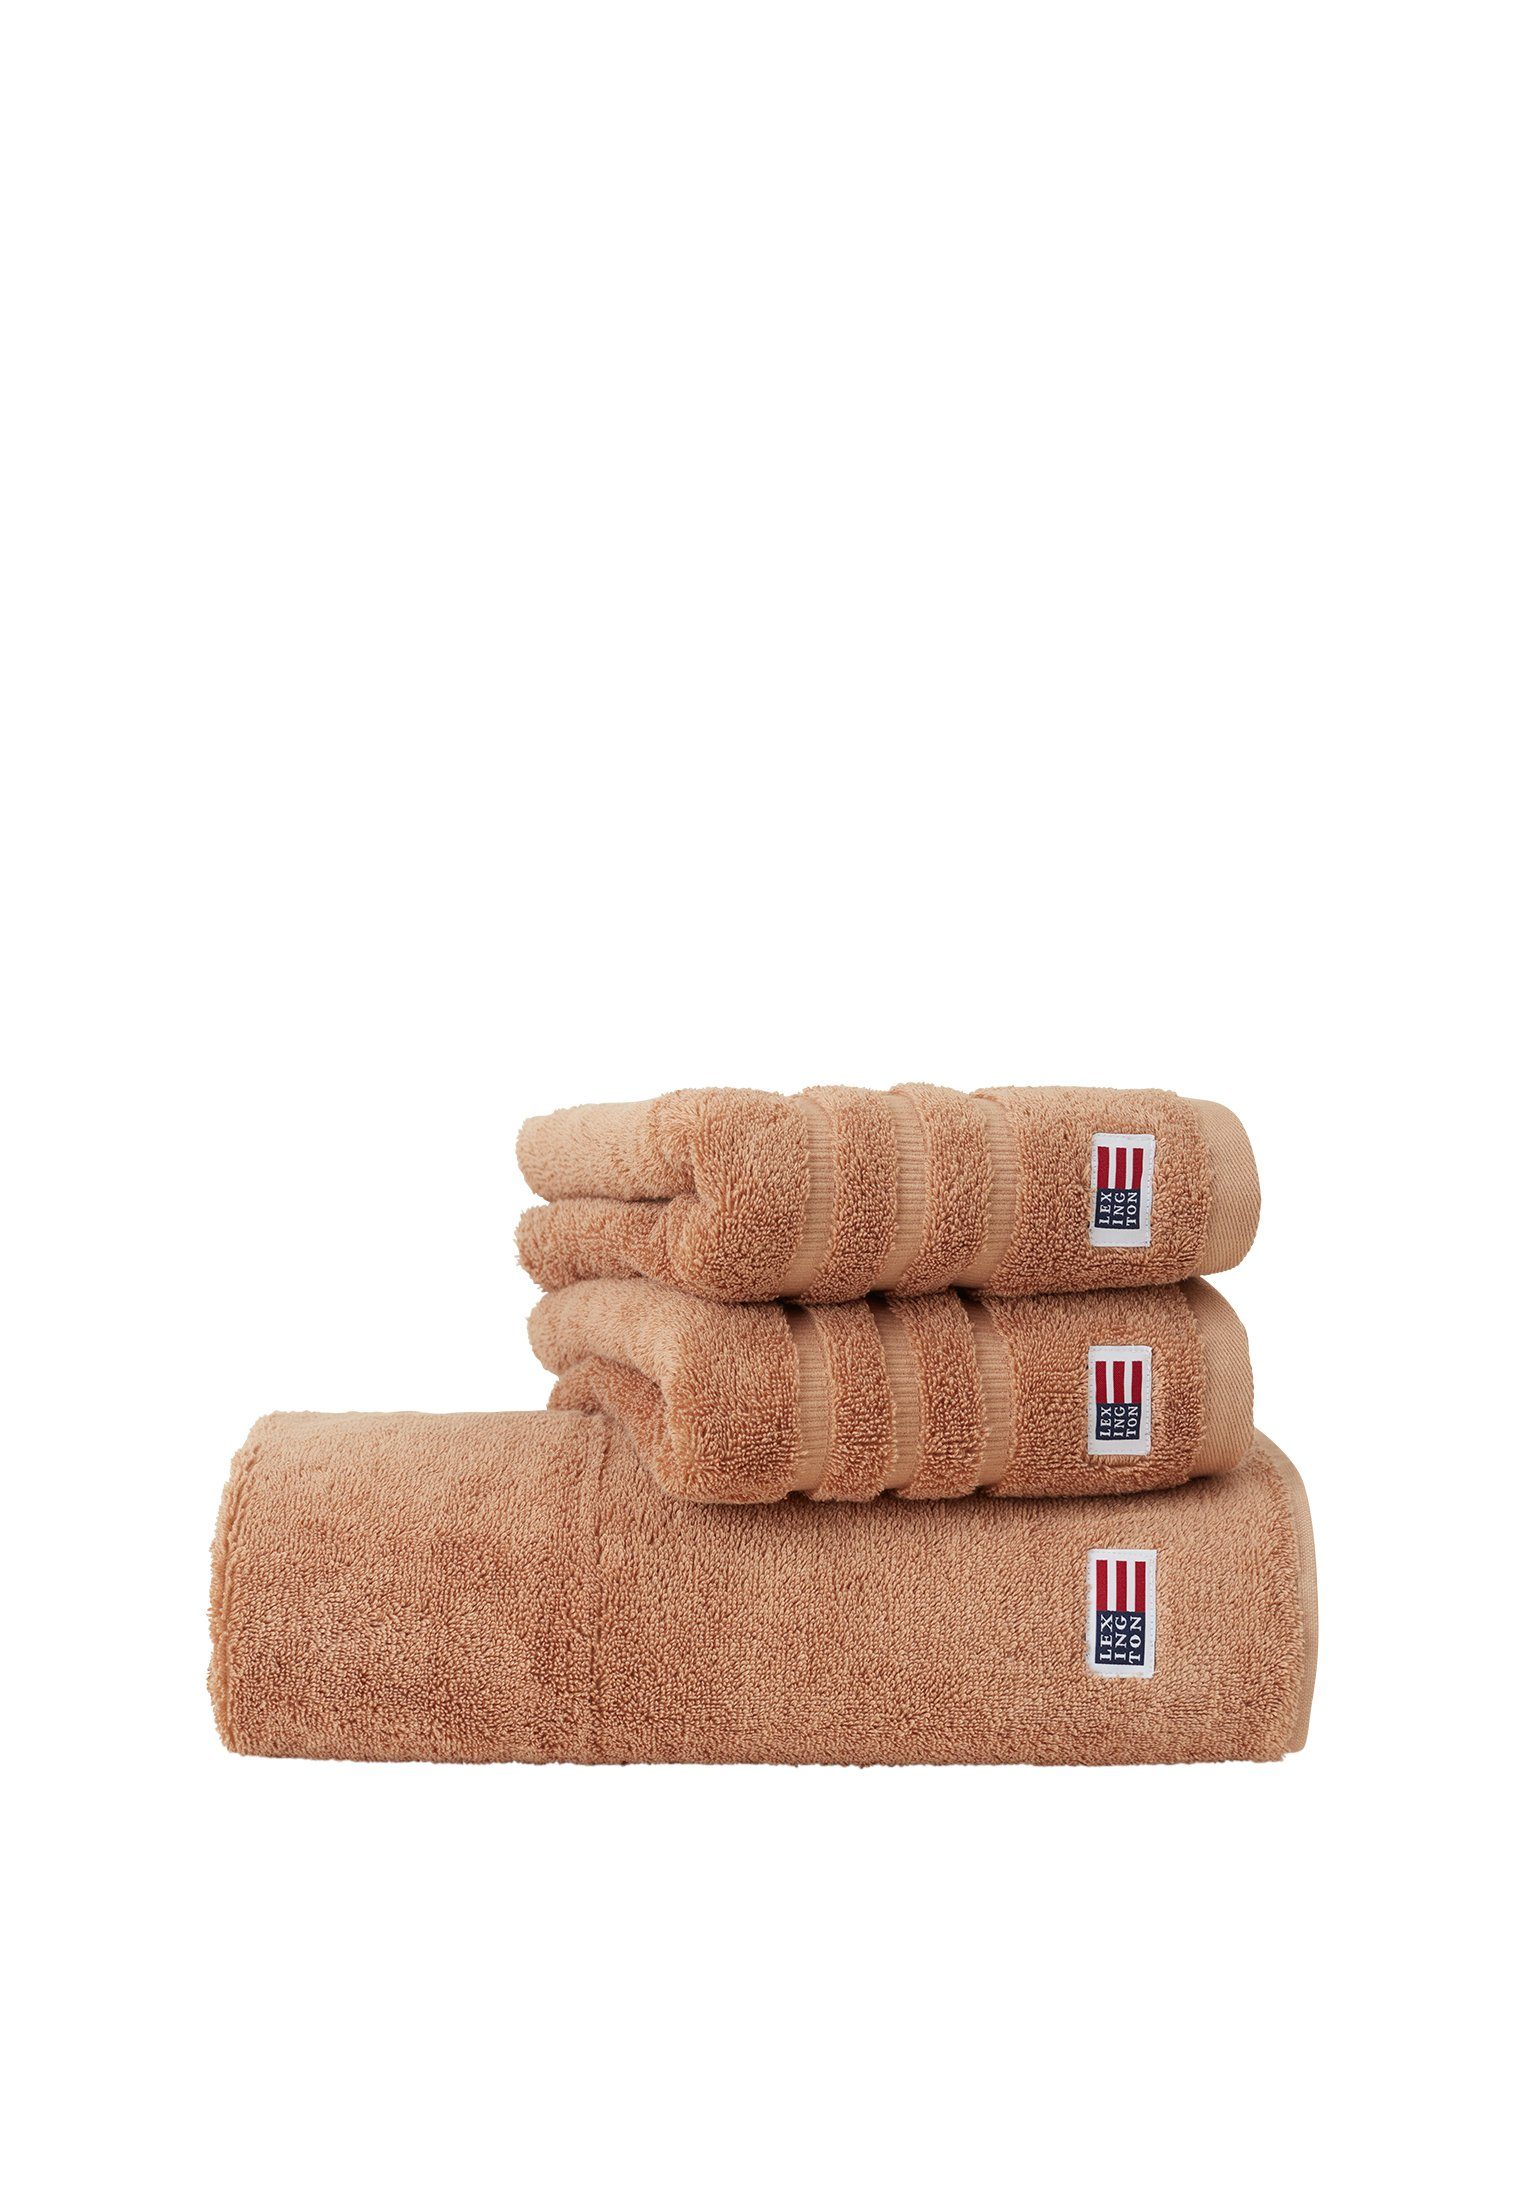 Lexington Handtuch Original Towel almond beige | Alle Handtücher